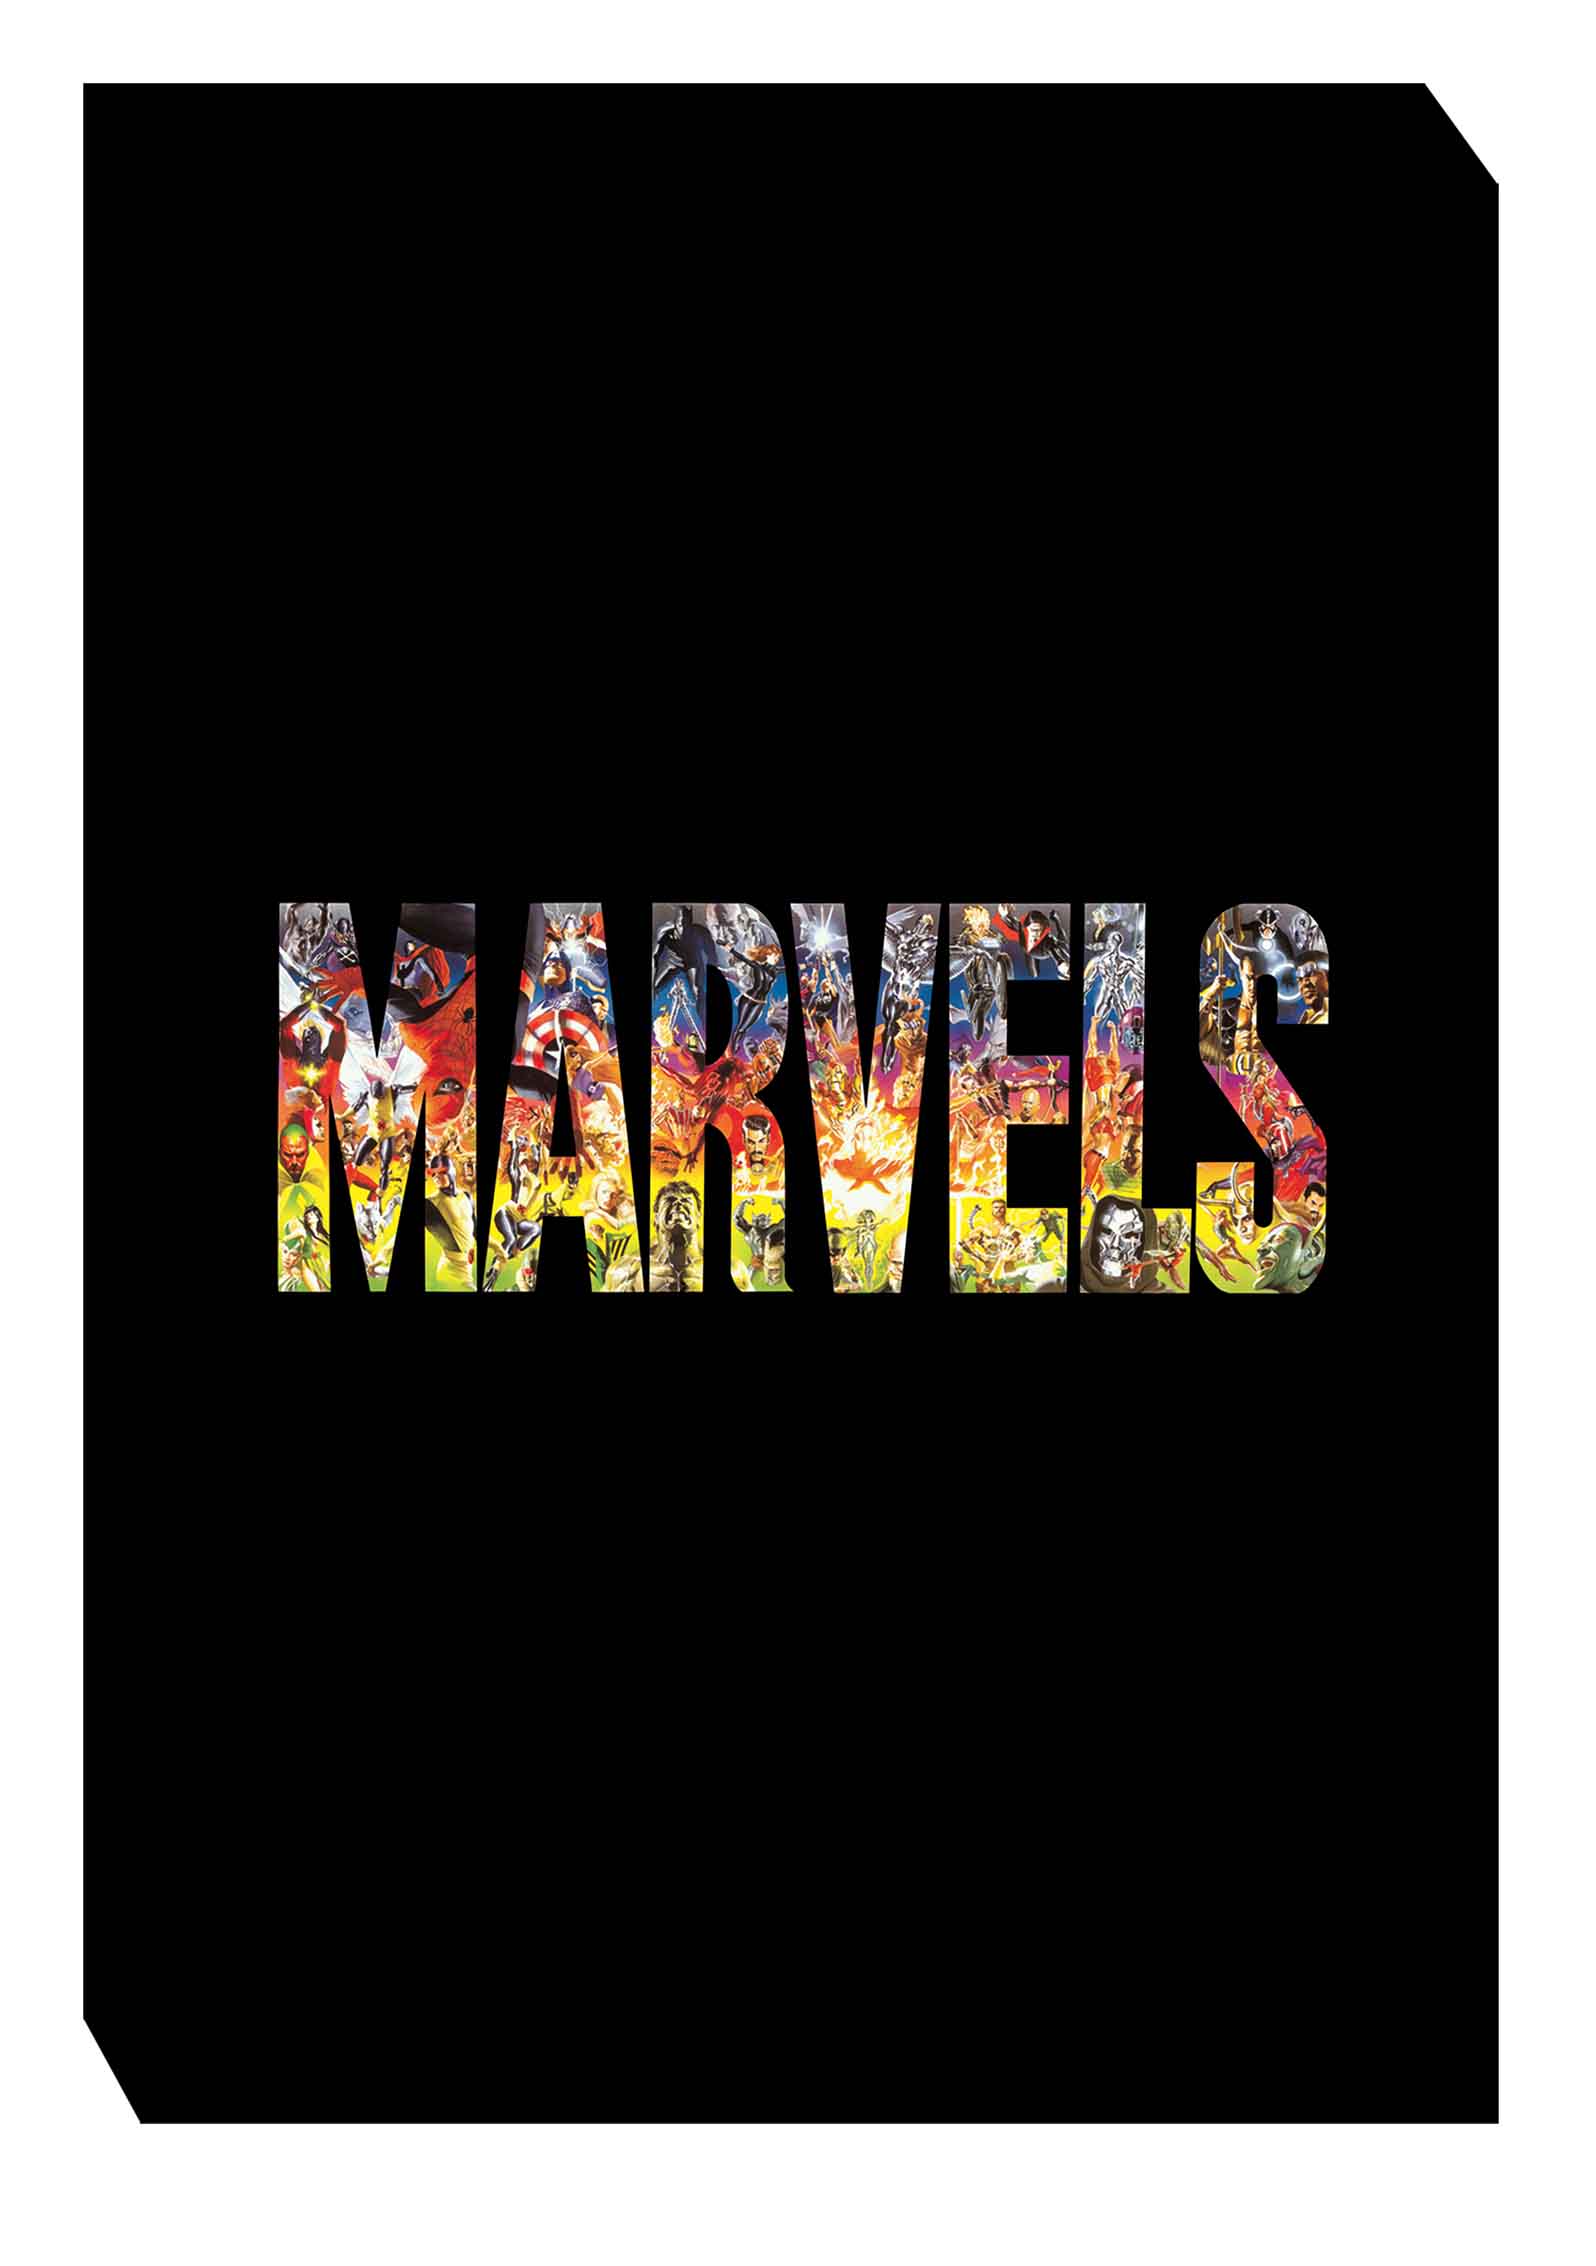 Marvels: The Platinum Edition (Hardcover)